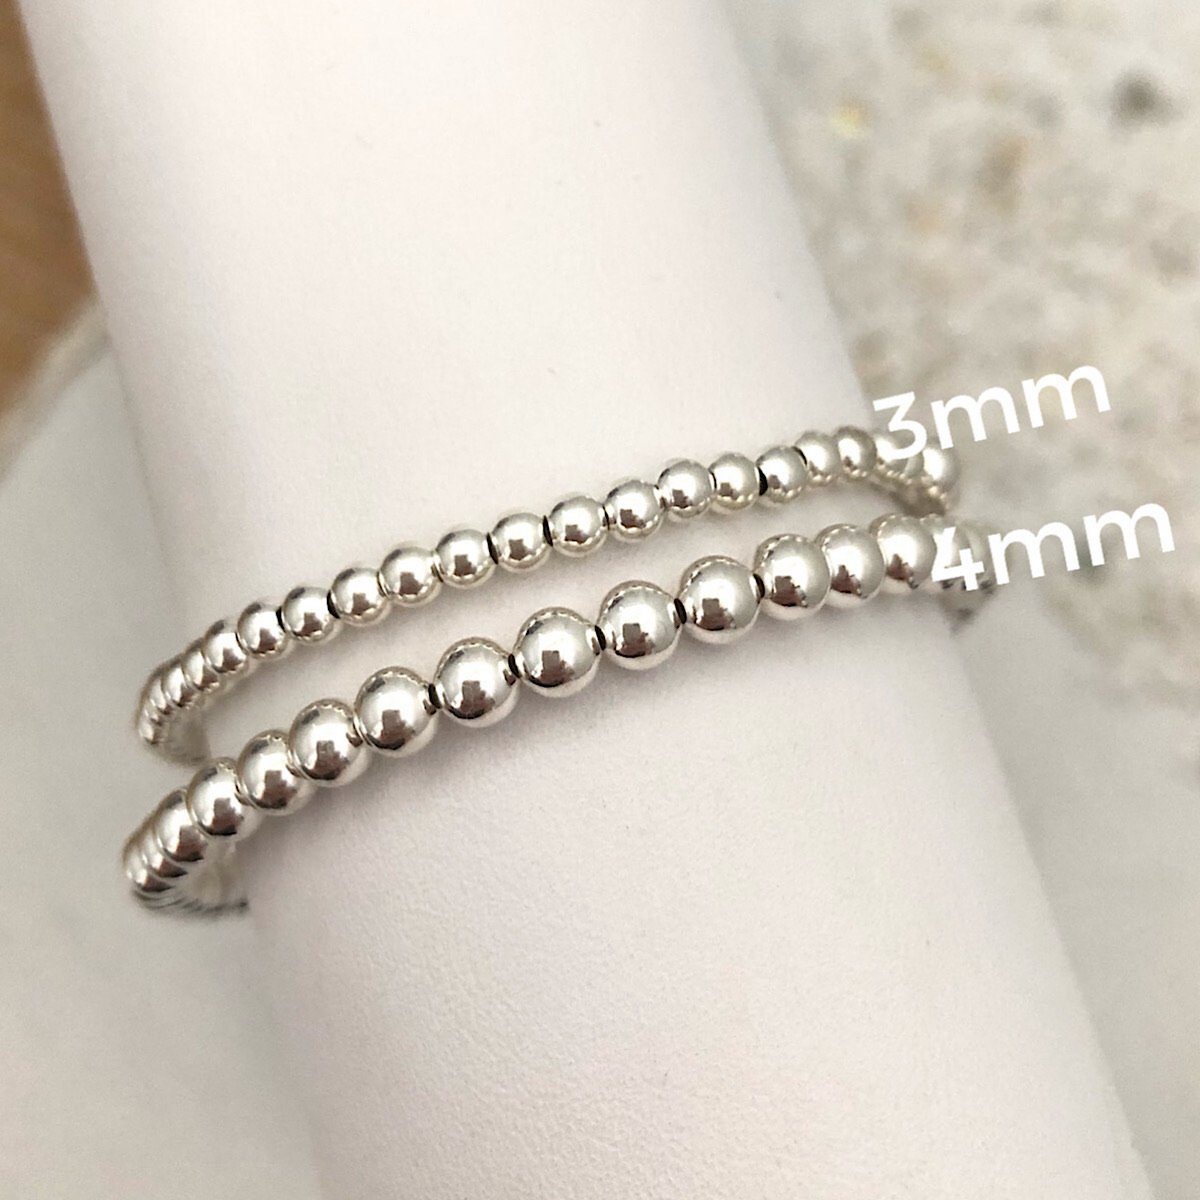 Round silver beads thread bracelet